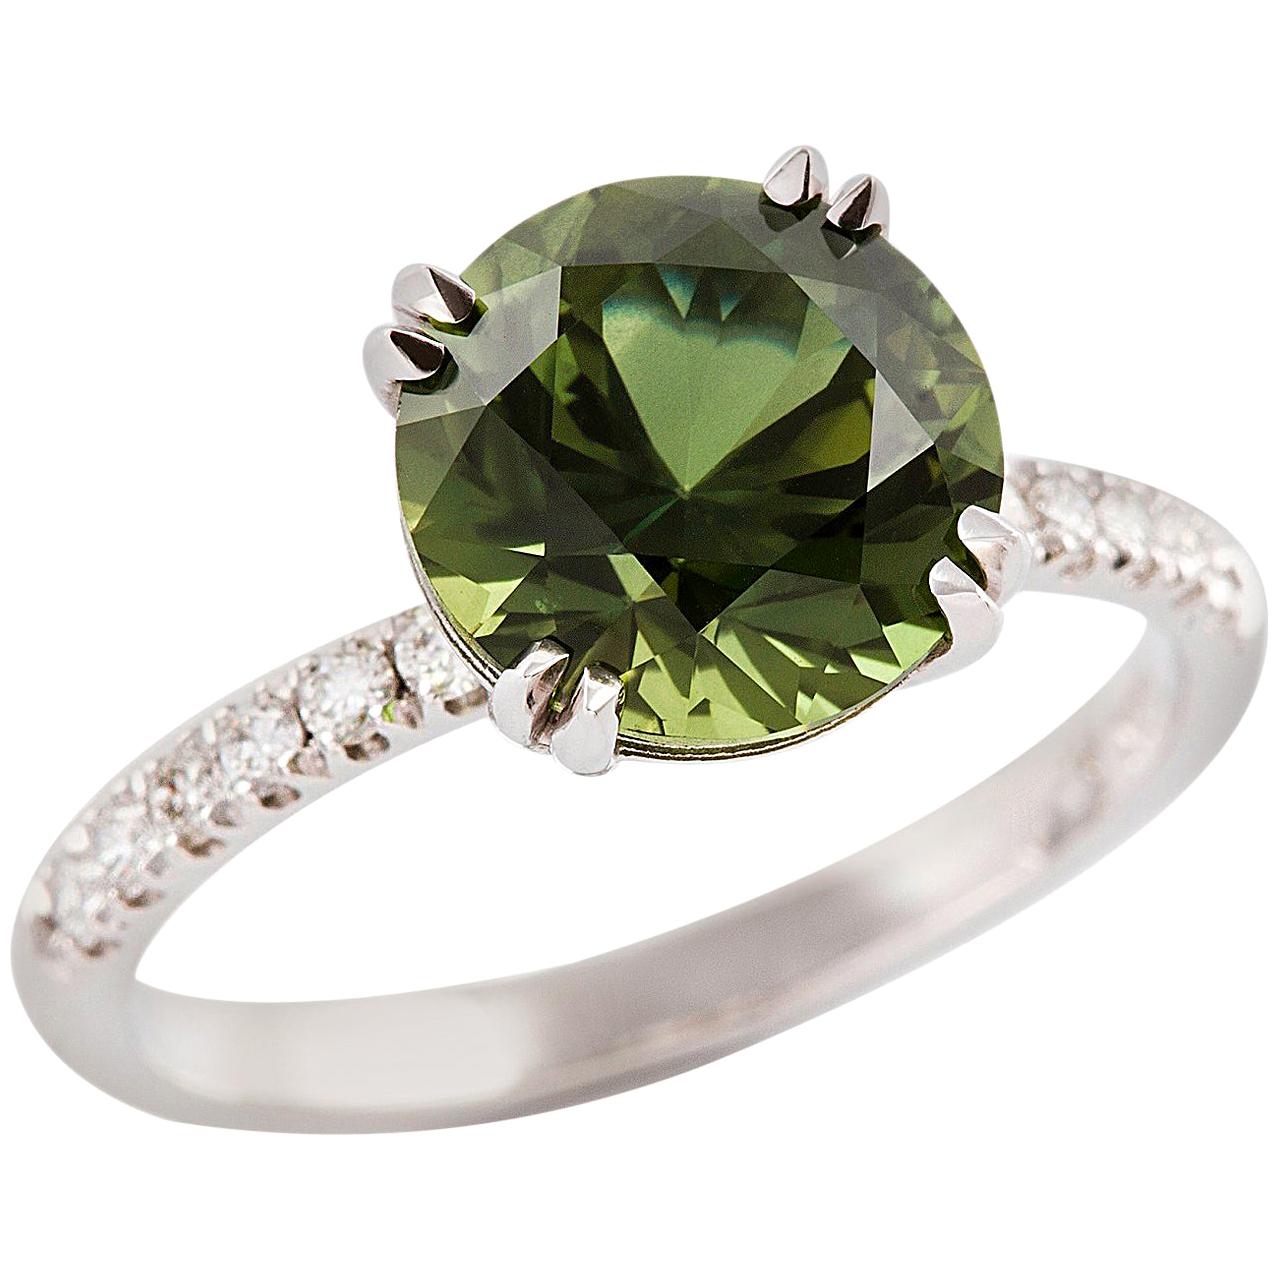 Kian Design 3.67 Carat Sapphire Diamond Engagement Ring 18 Carat White Gold